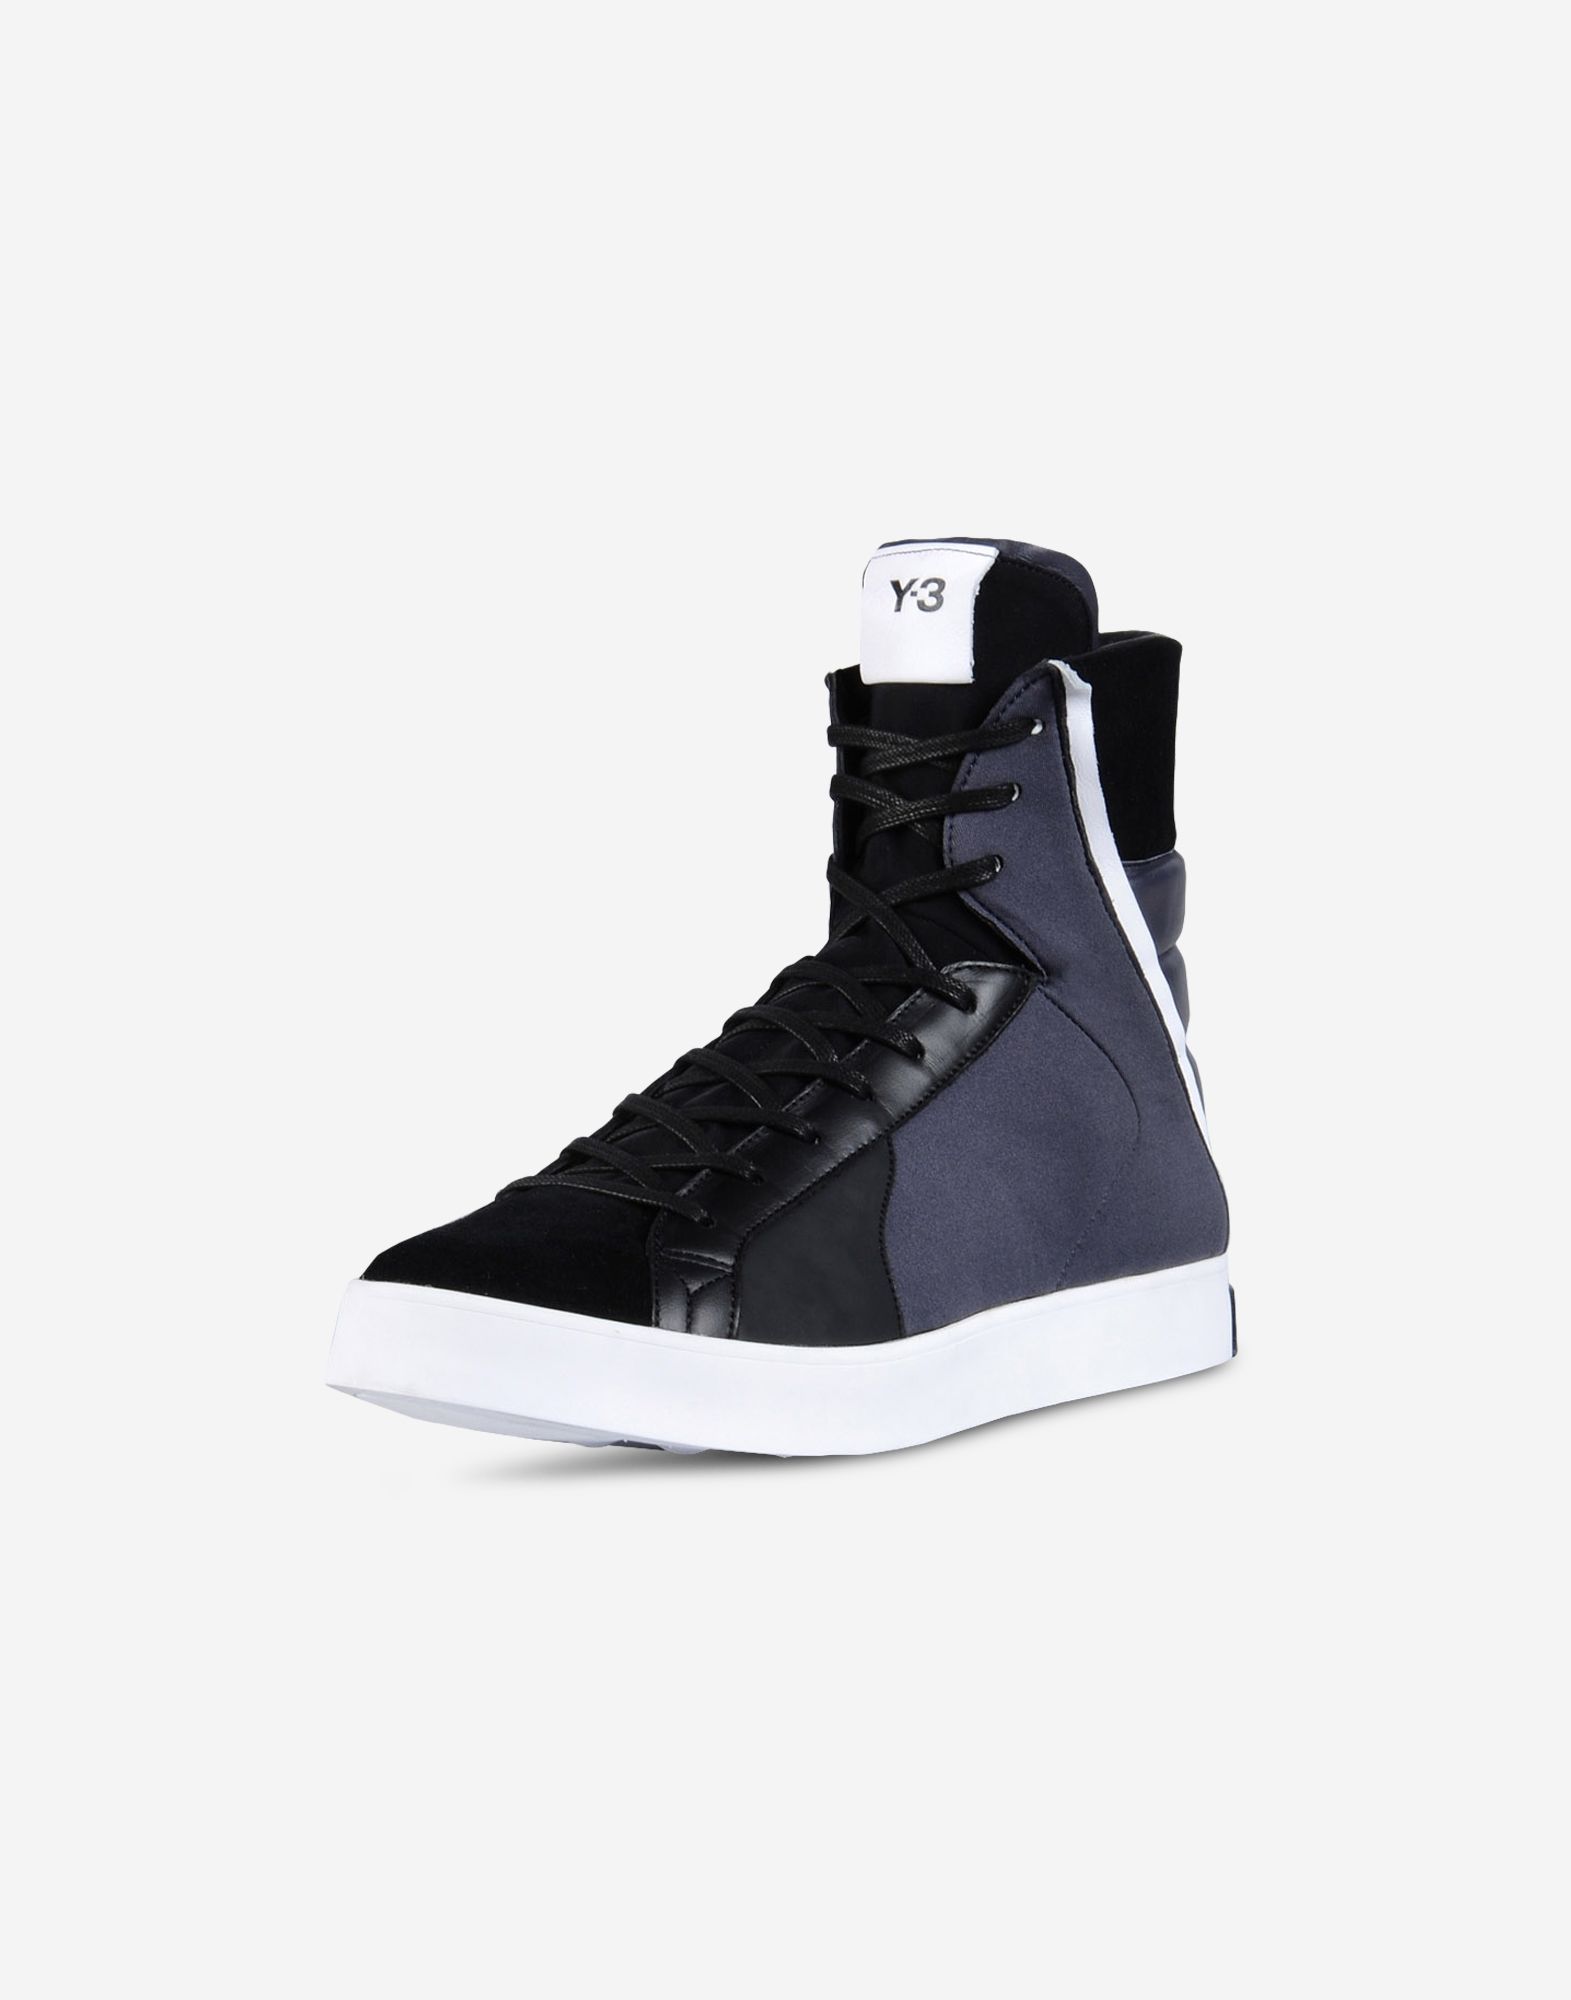 Y 3 LT MID ‎ ‎High Top Sneakers‎ ‎ ‎ | Adidas Y-3 Official Site